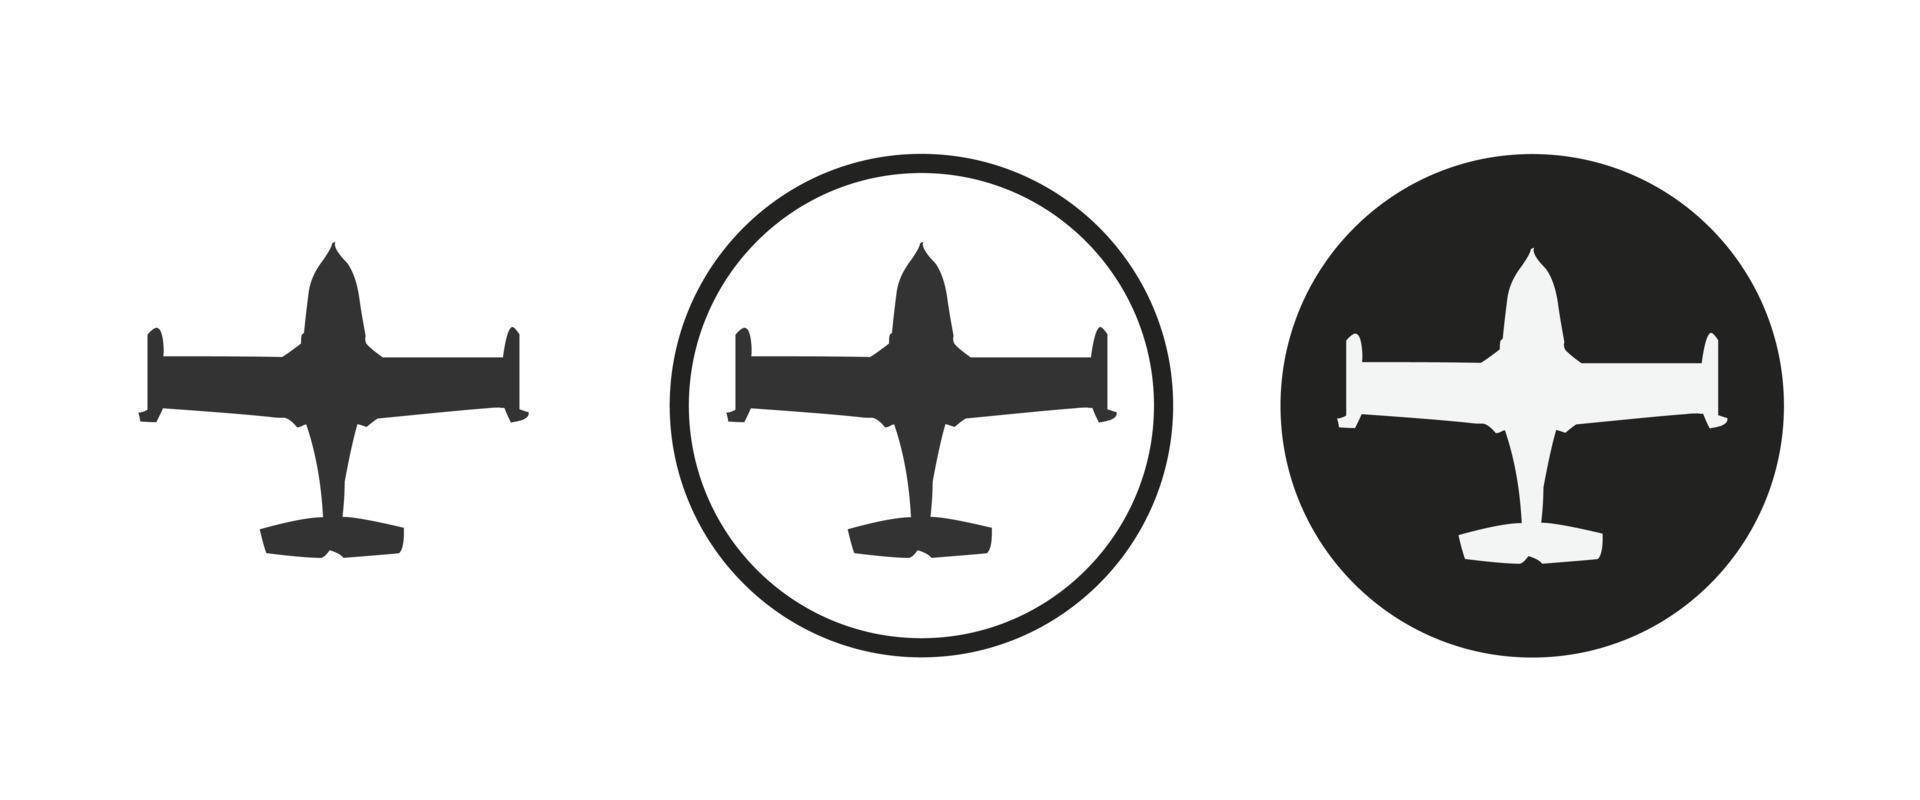 Trainingsflugzeug-Symbol. Web-Icon-Set. Icons Sammlung flach. einfache Vektorillustration. vektor